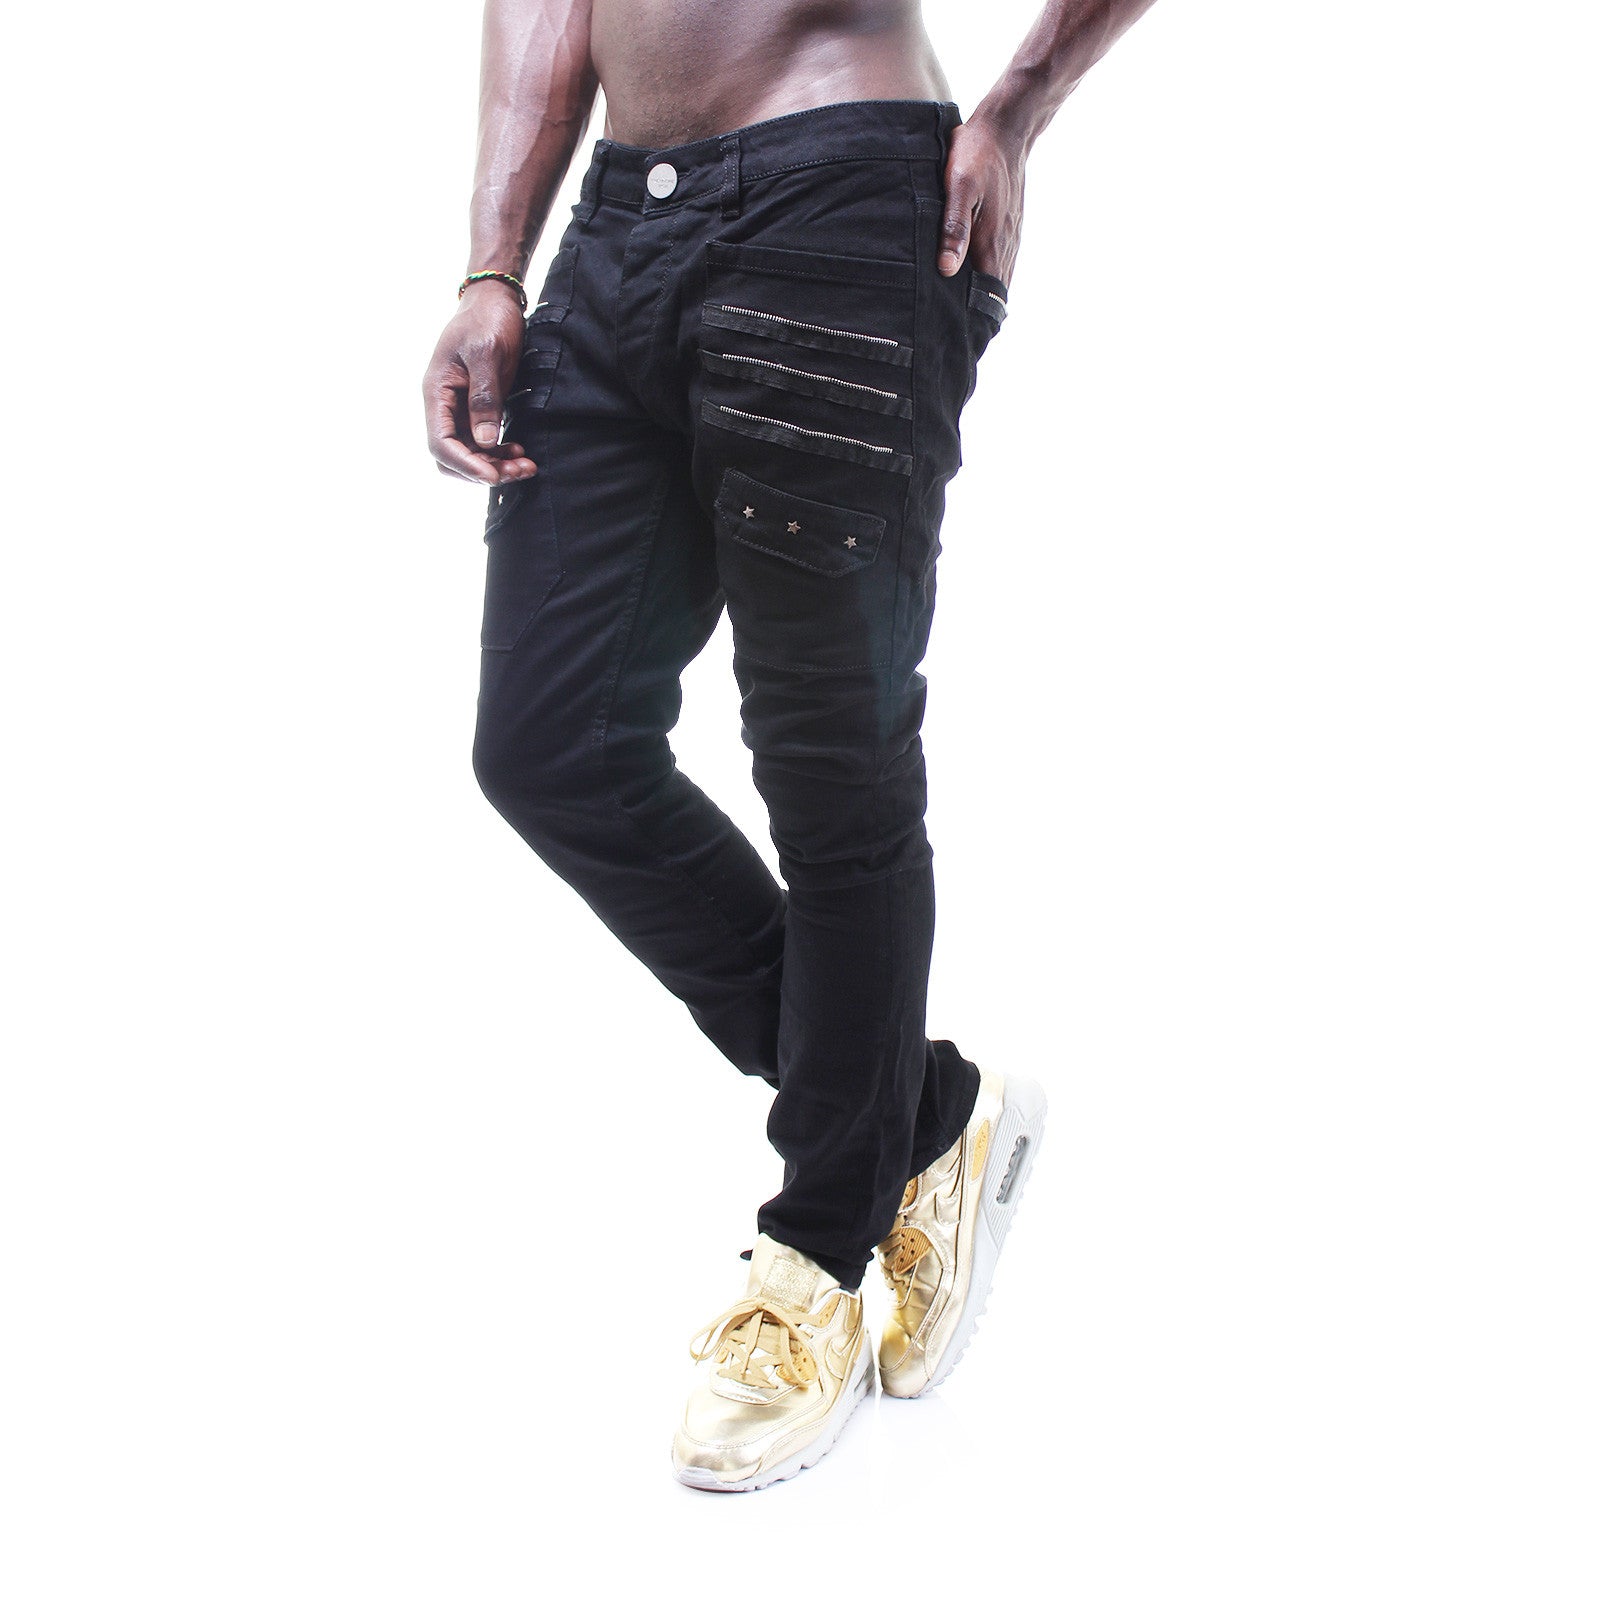 P&V Men Slim Fit 3 Zippers 3 Stars Jeans - Black - FASH STOP